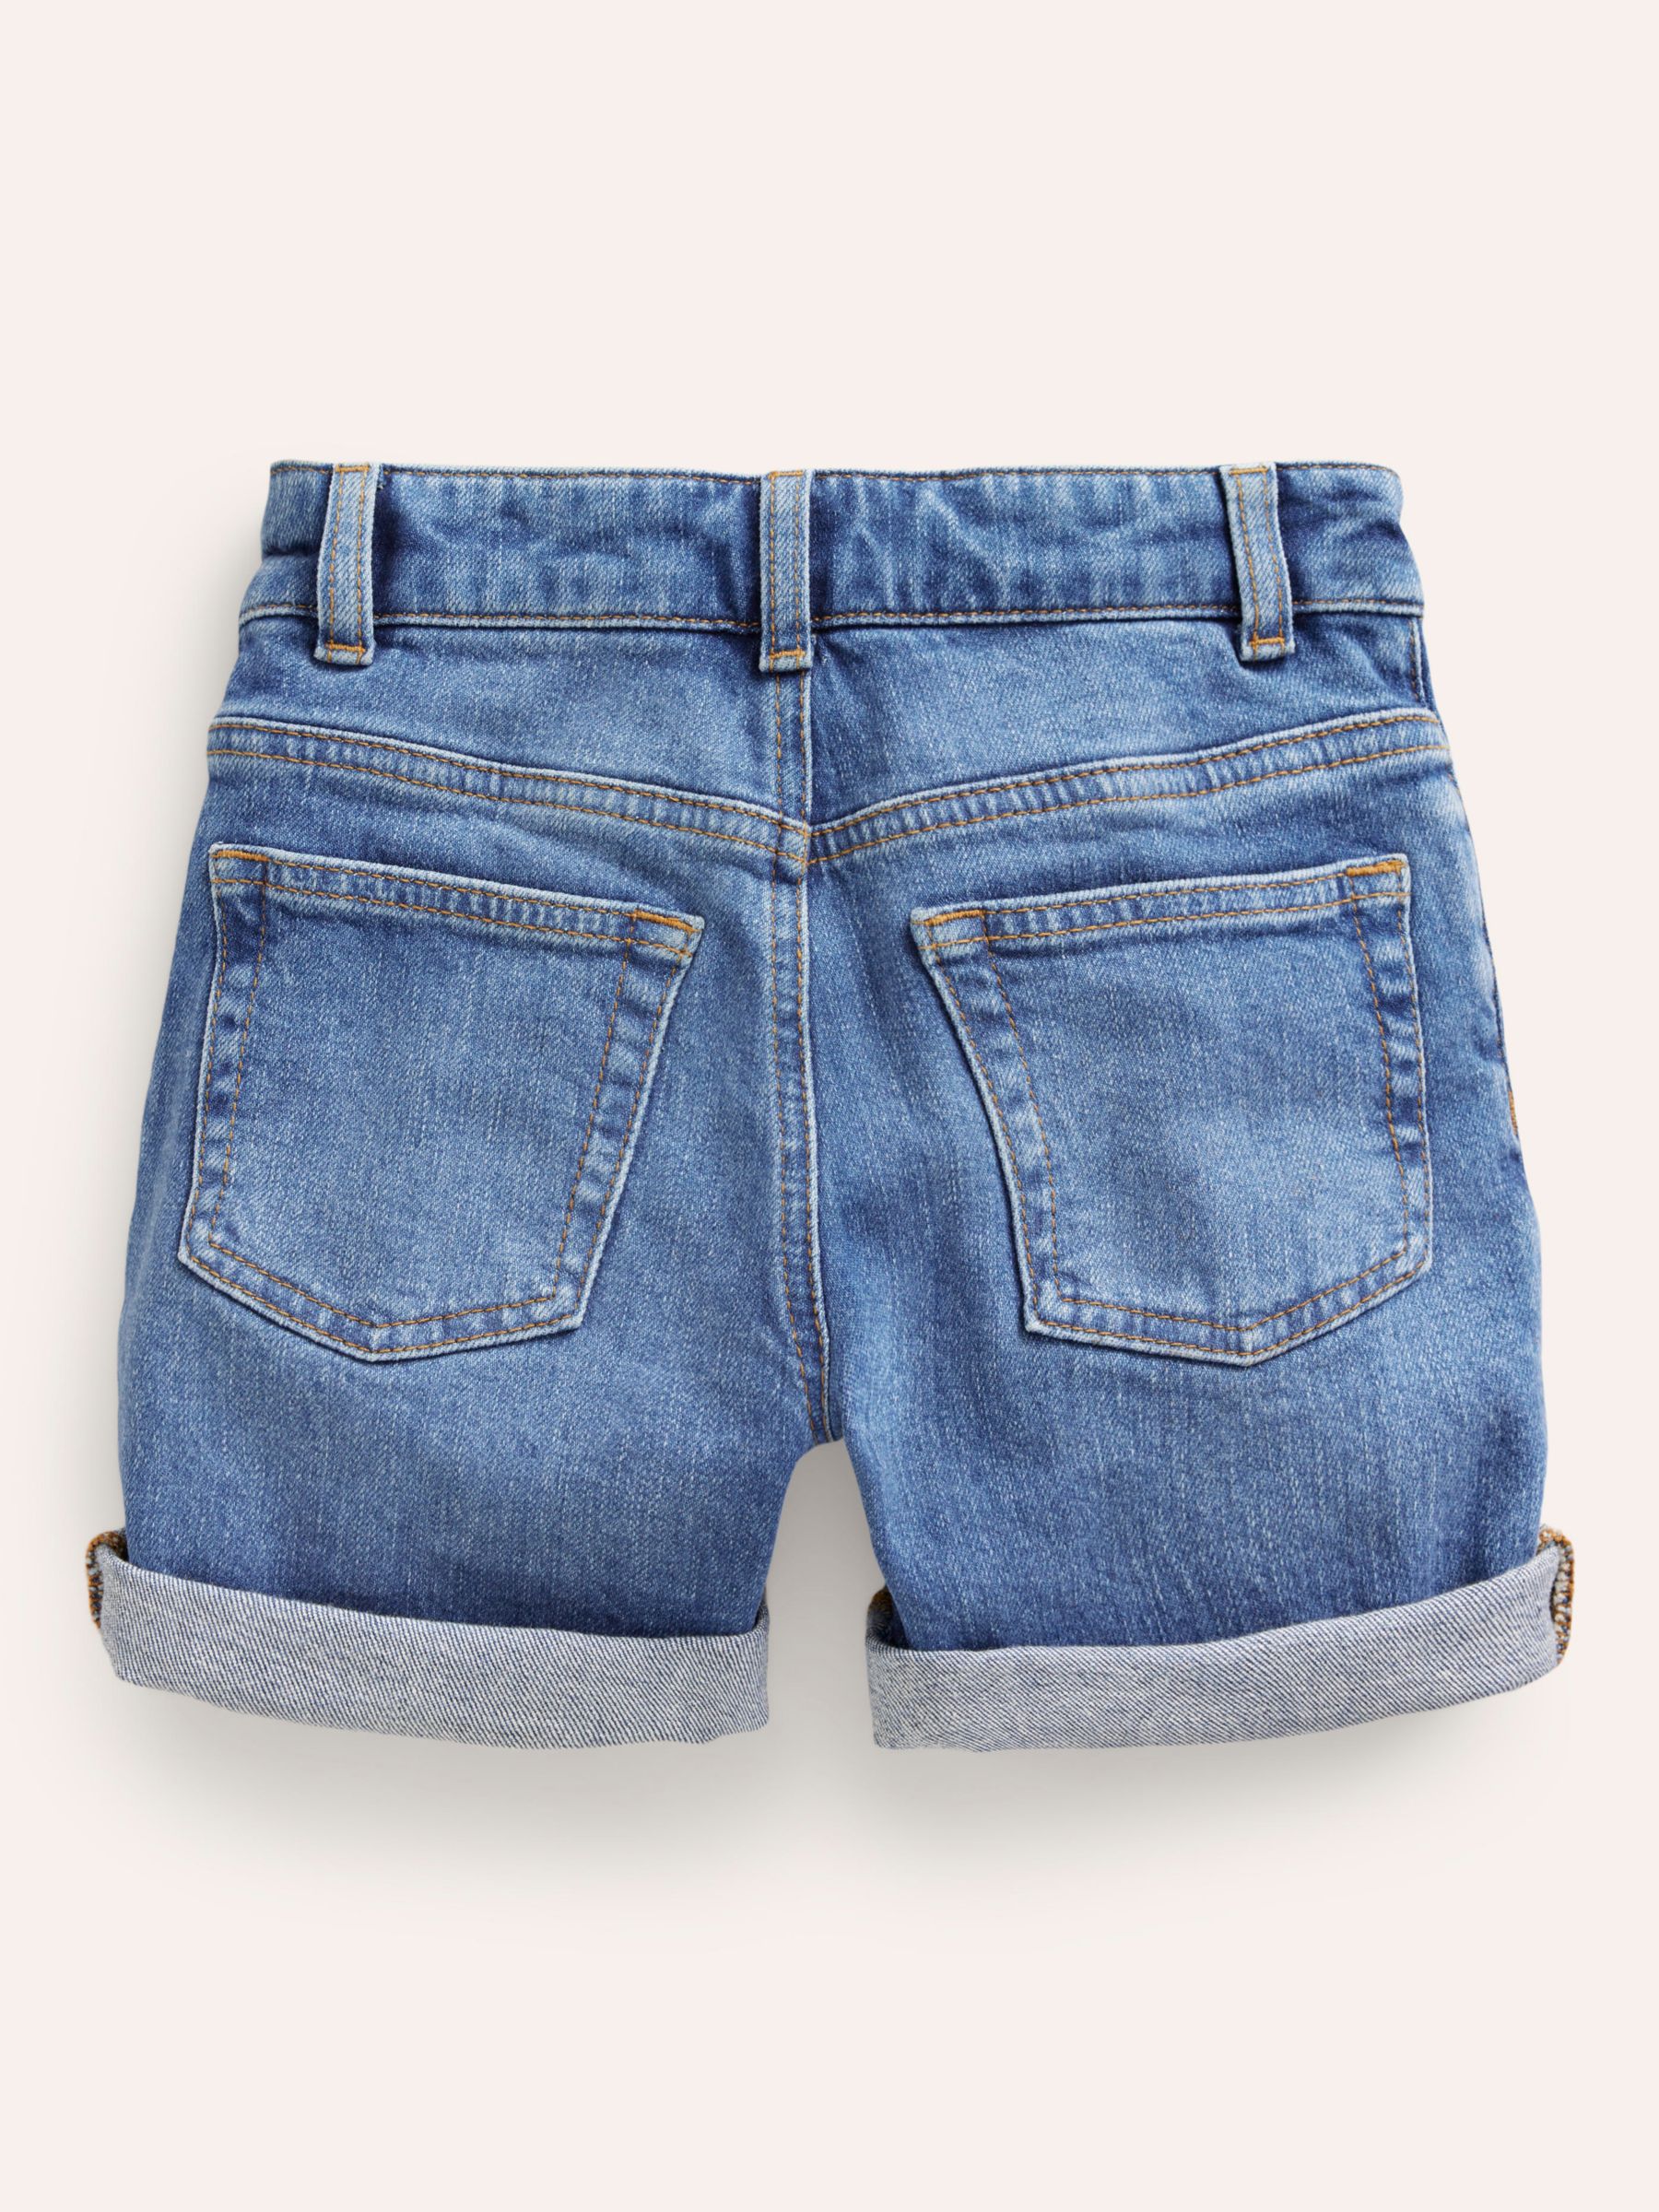 Mini Boden Kids' Denim Shorts, Mid Blue, 8Y